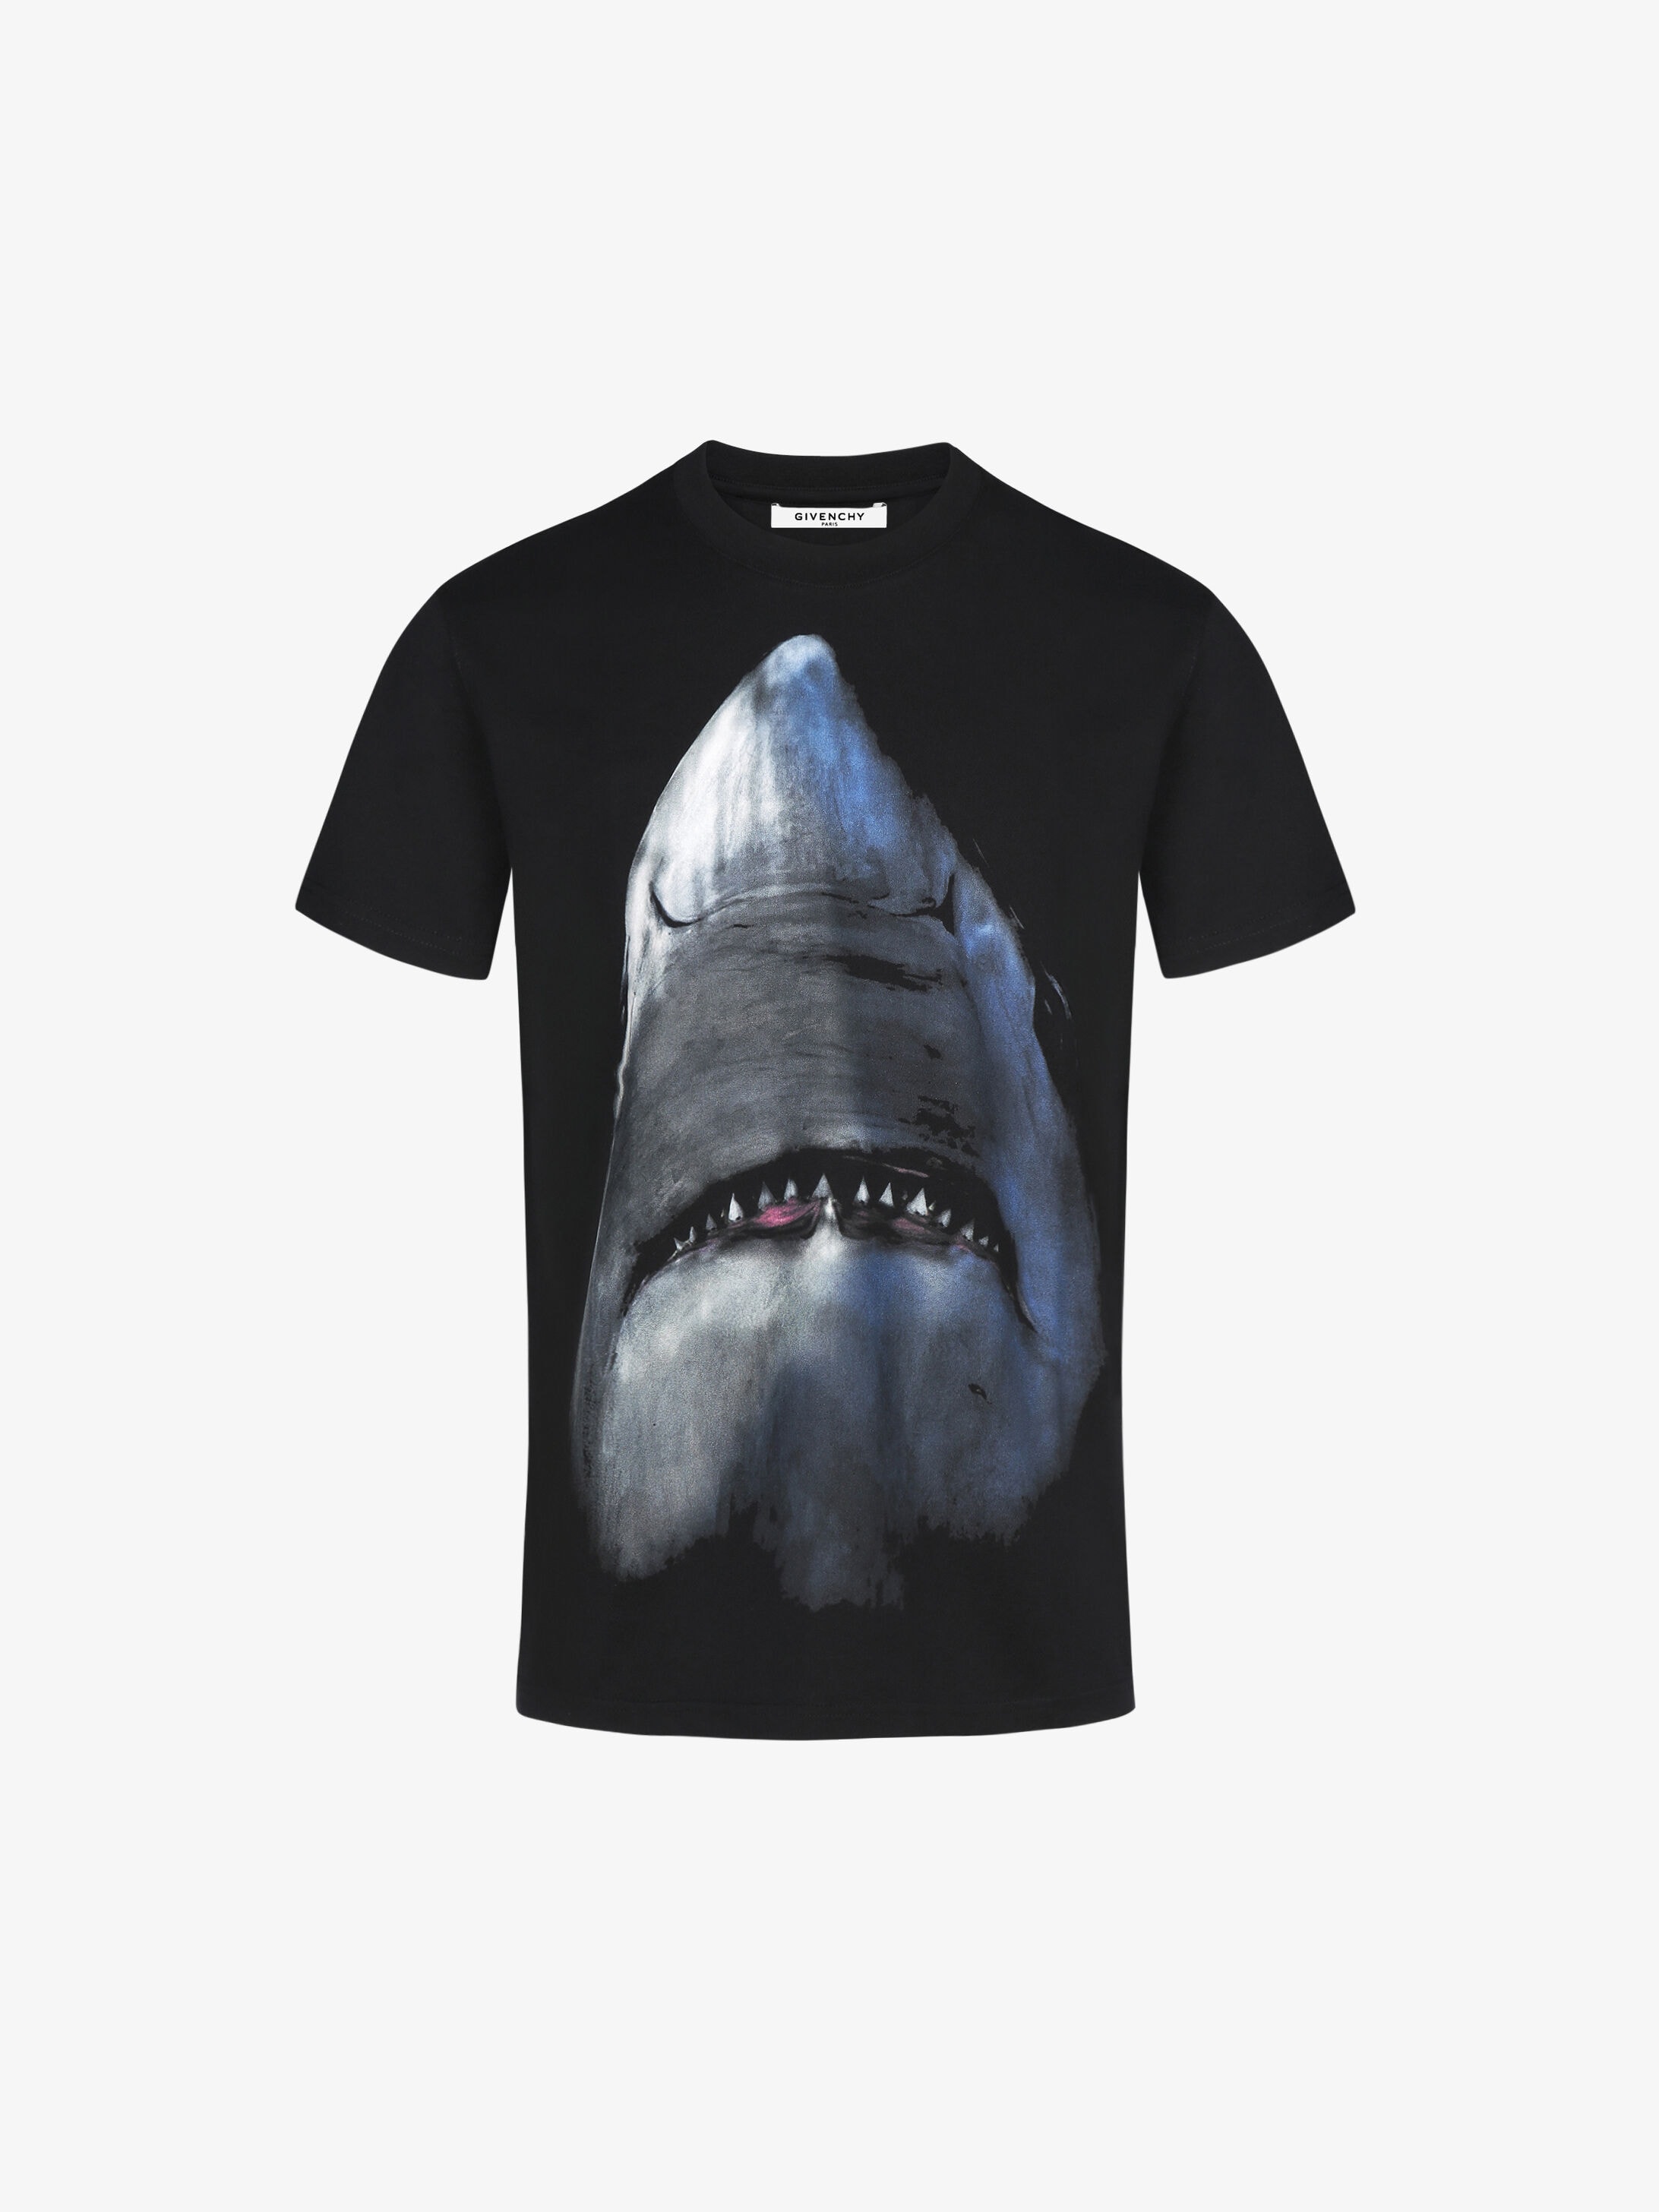 givenchy shark jumper